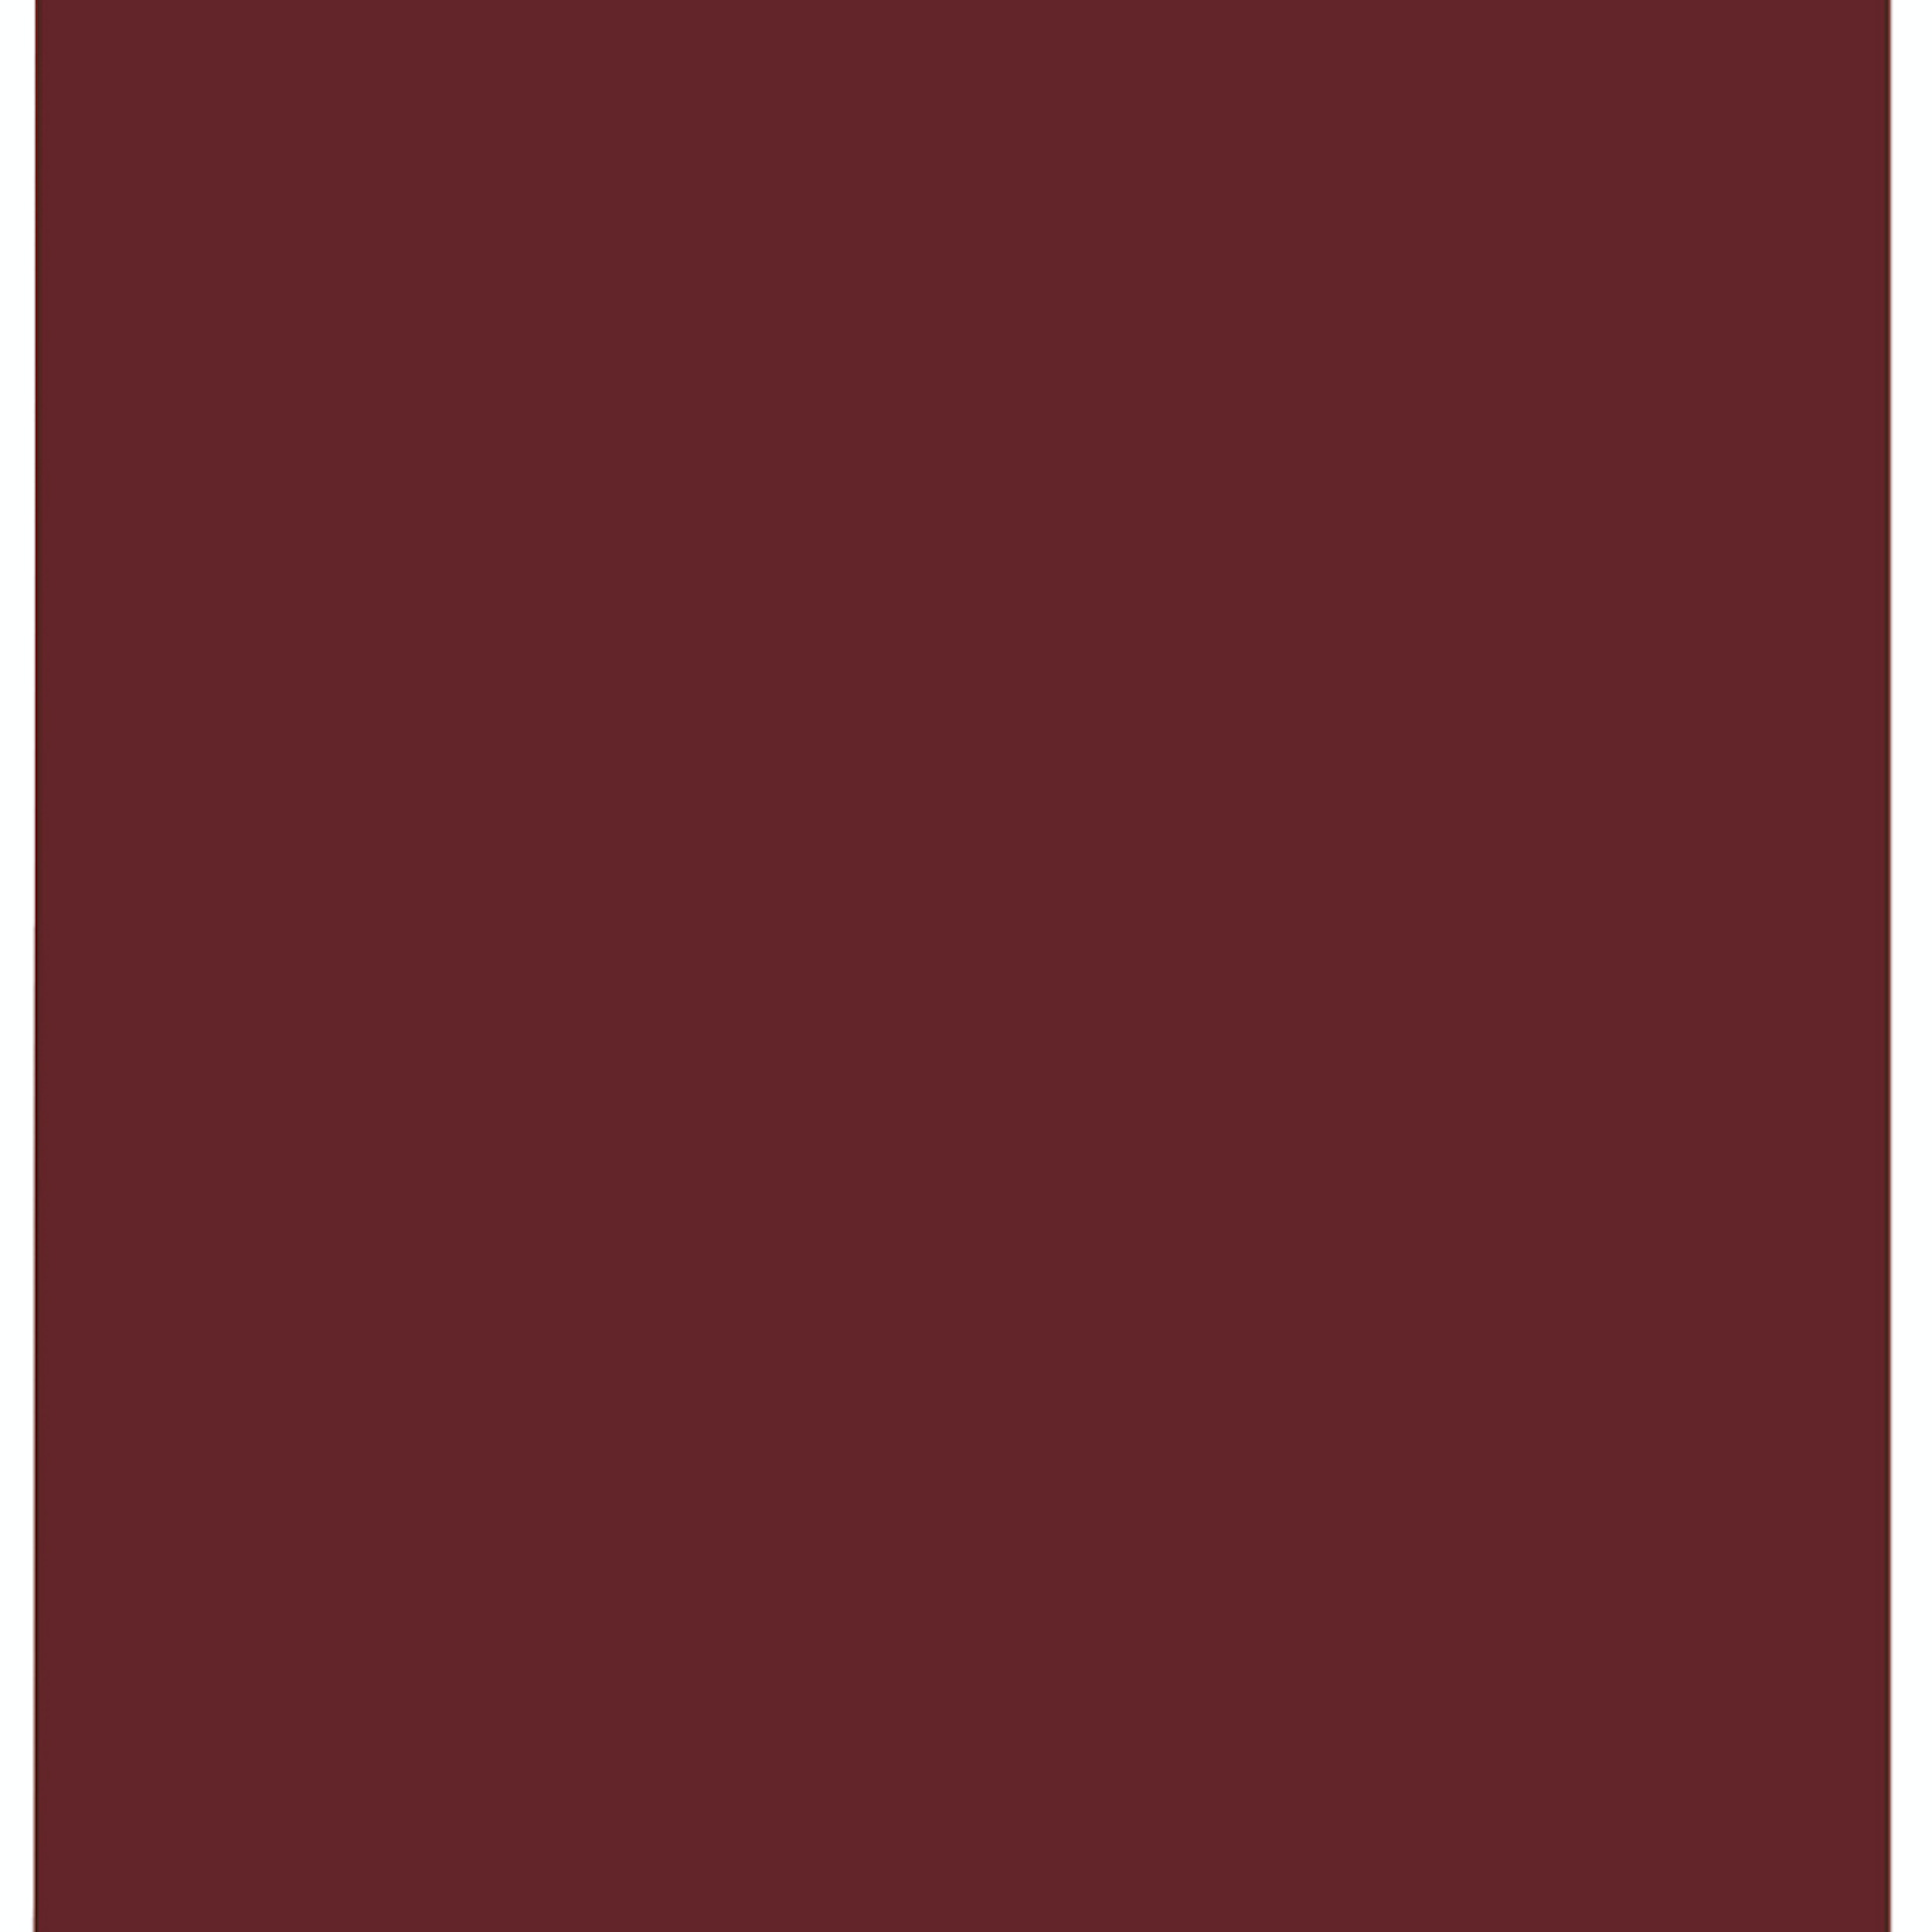 Matlak front (5012 Karmijn rood)